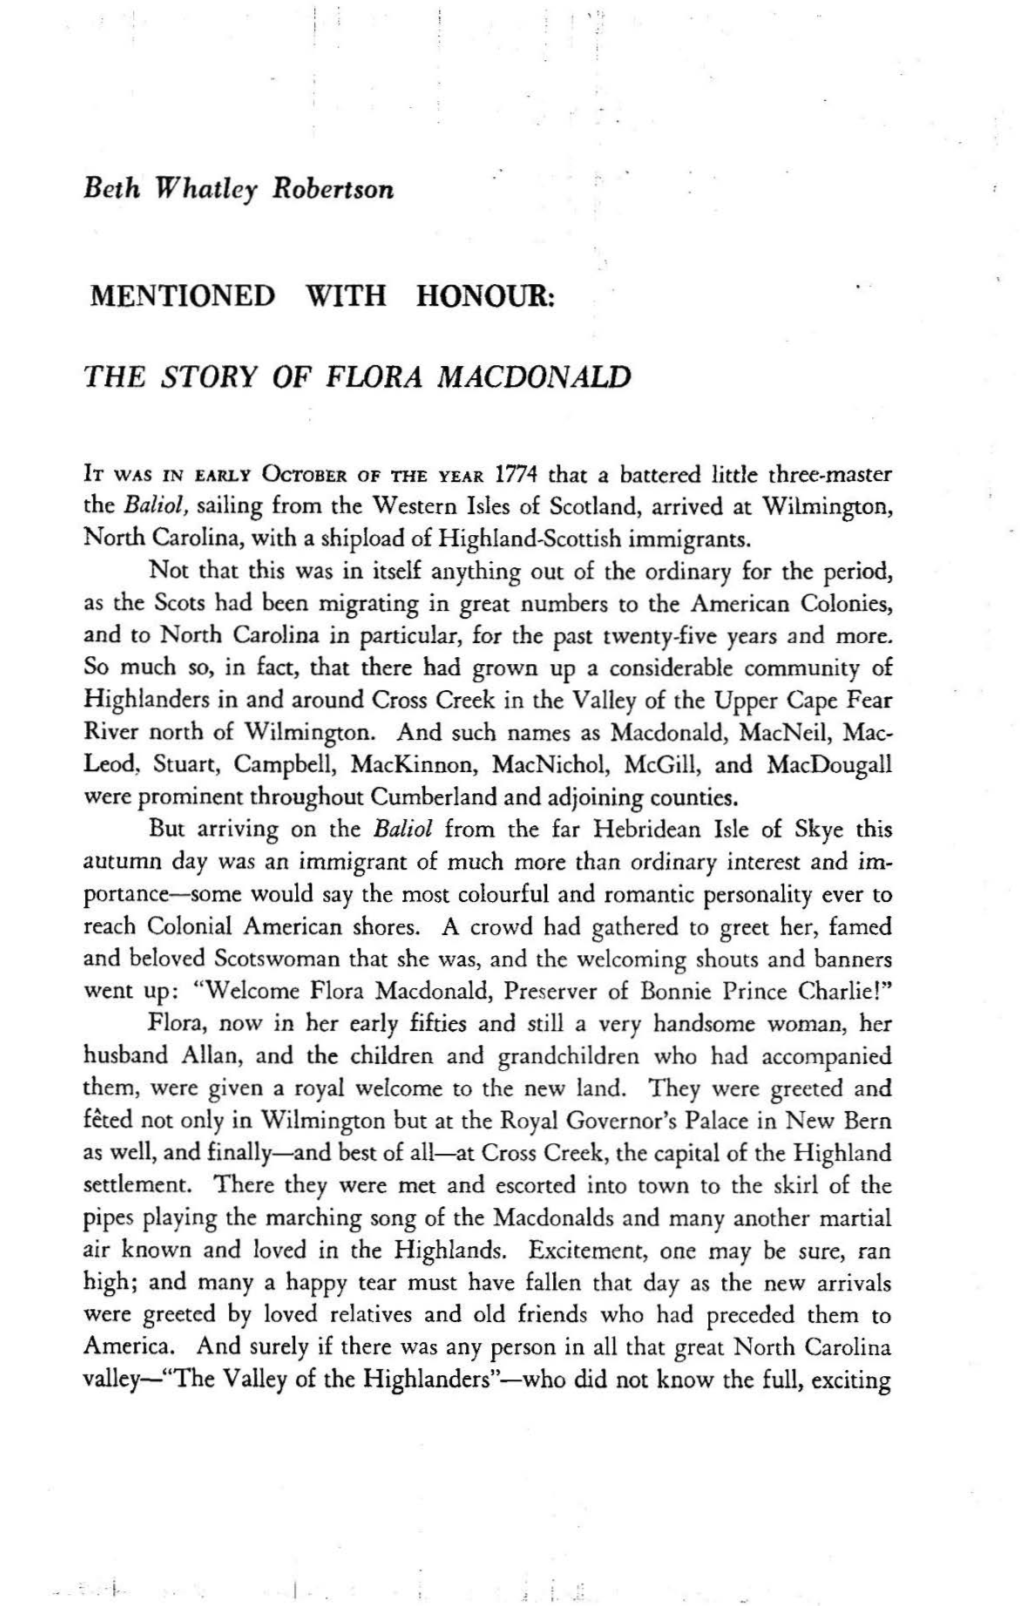 The Story of Fwra Macdonald